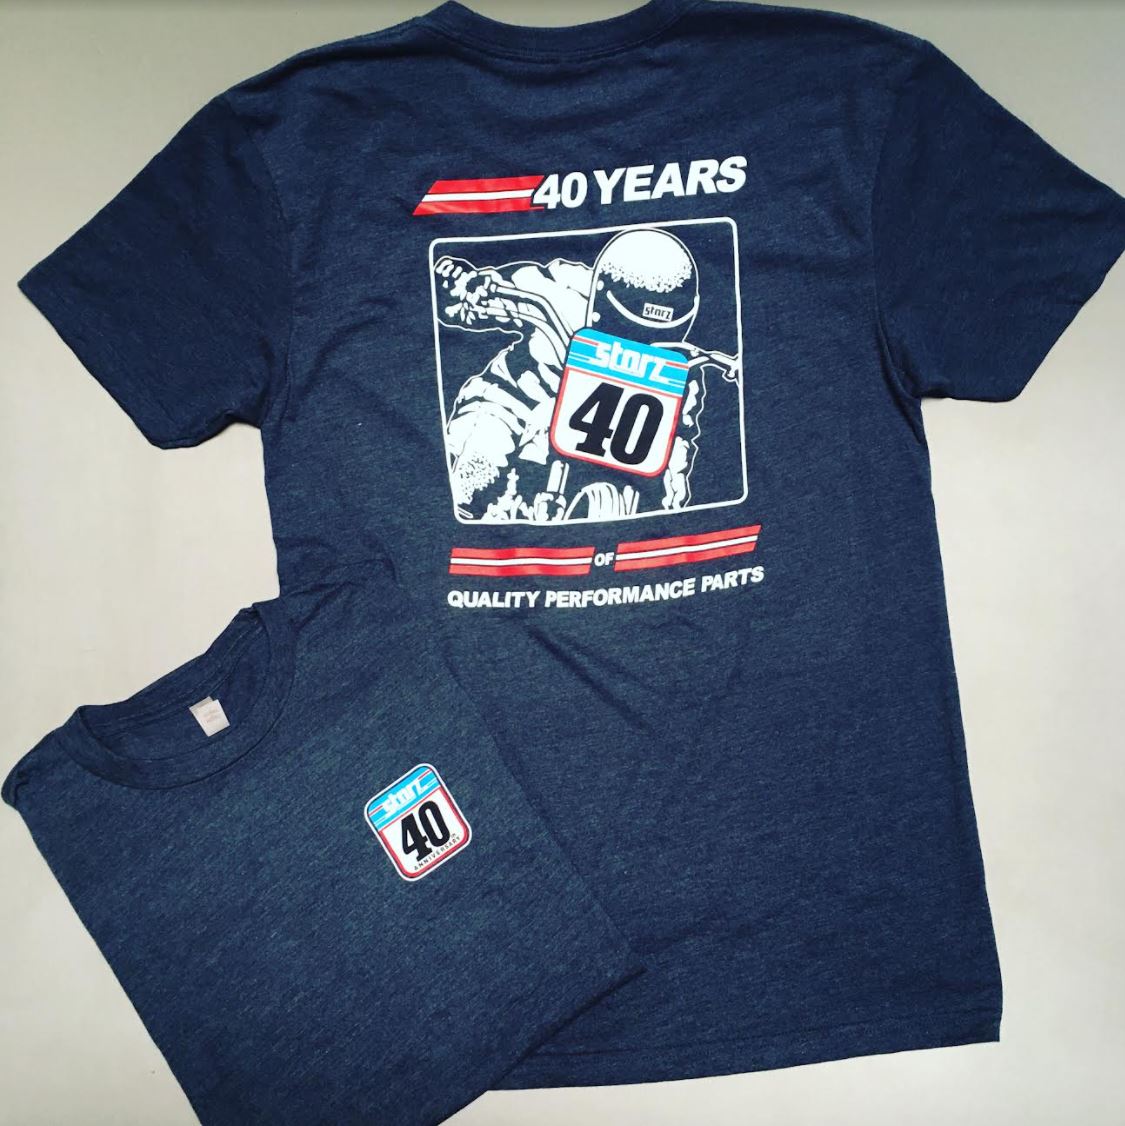 Storz Performance 40th Anniversary Tee Shirt